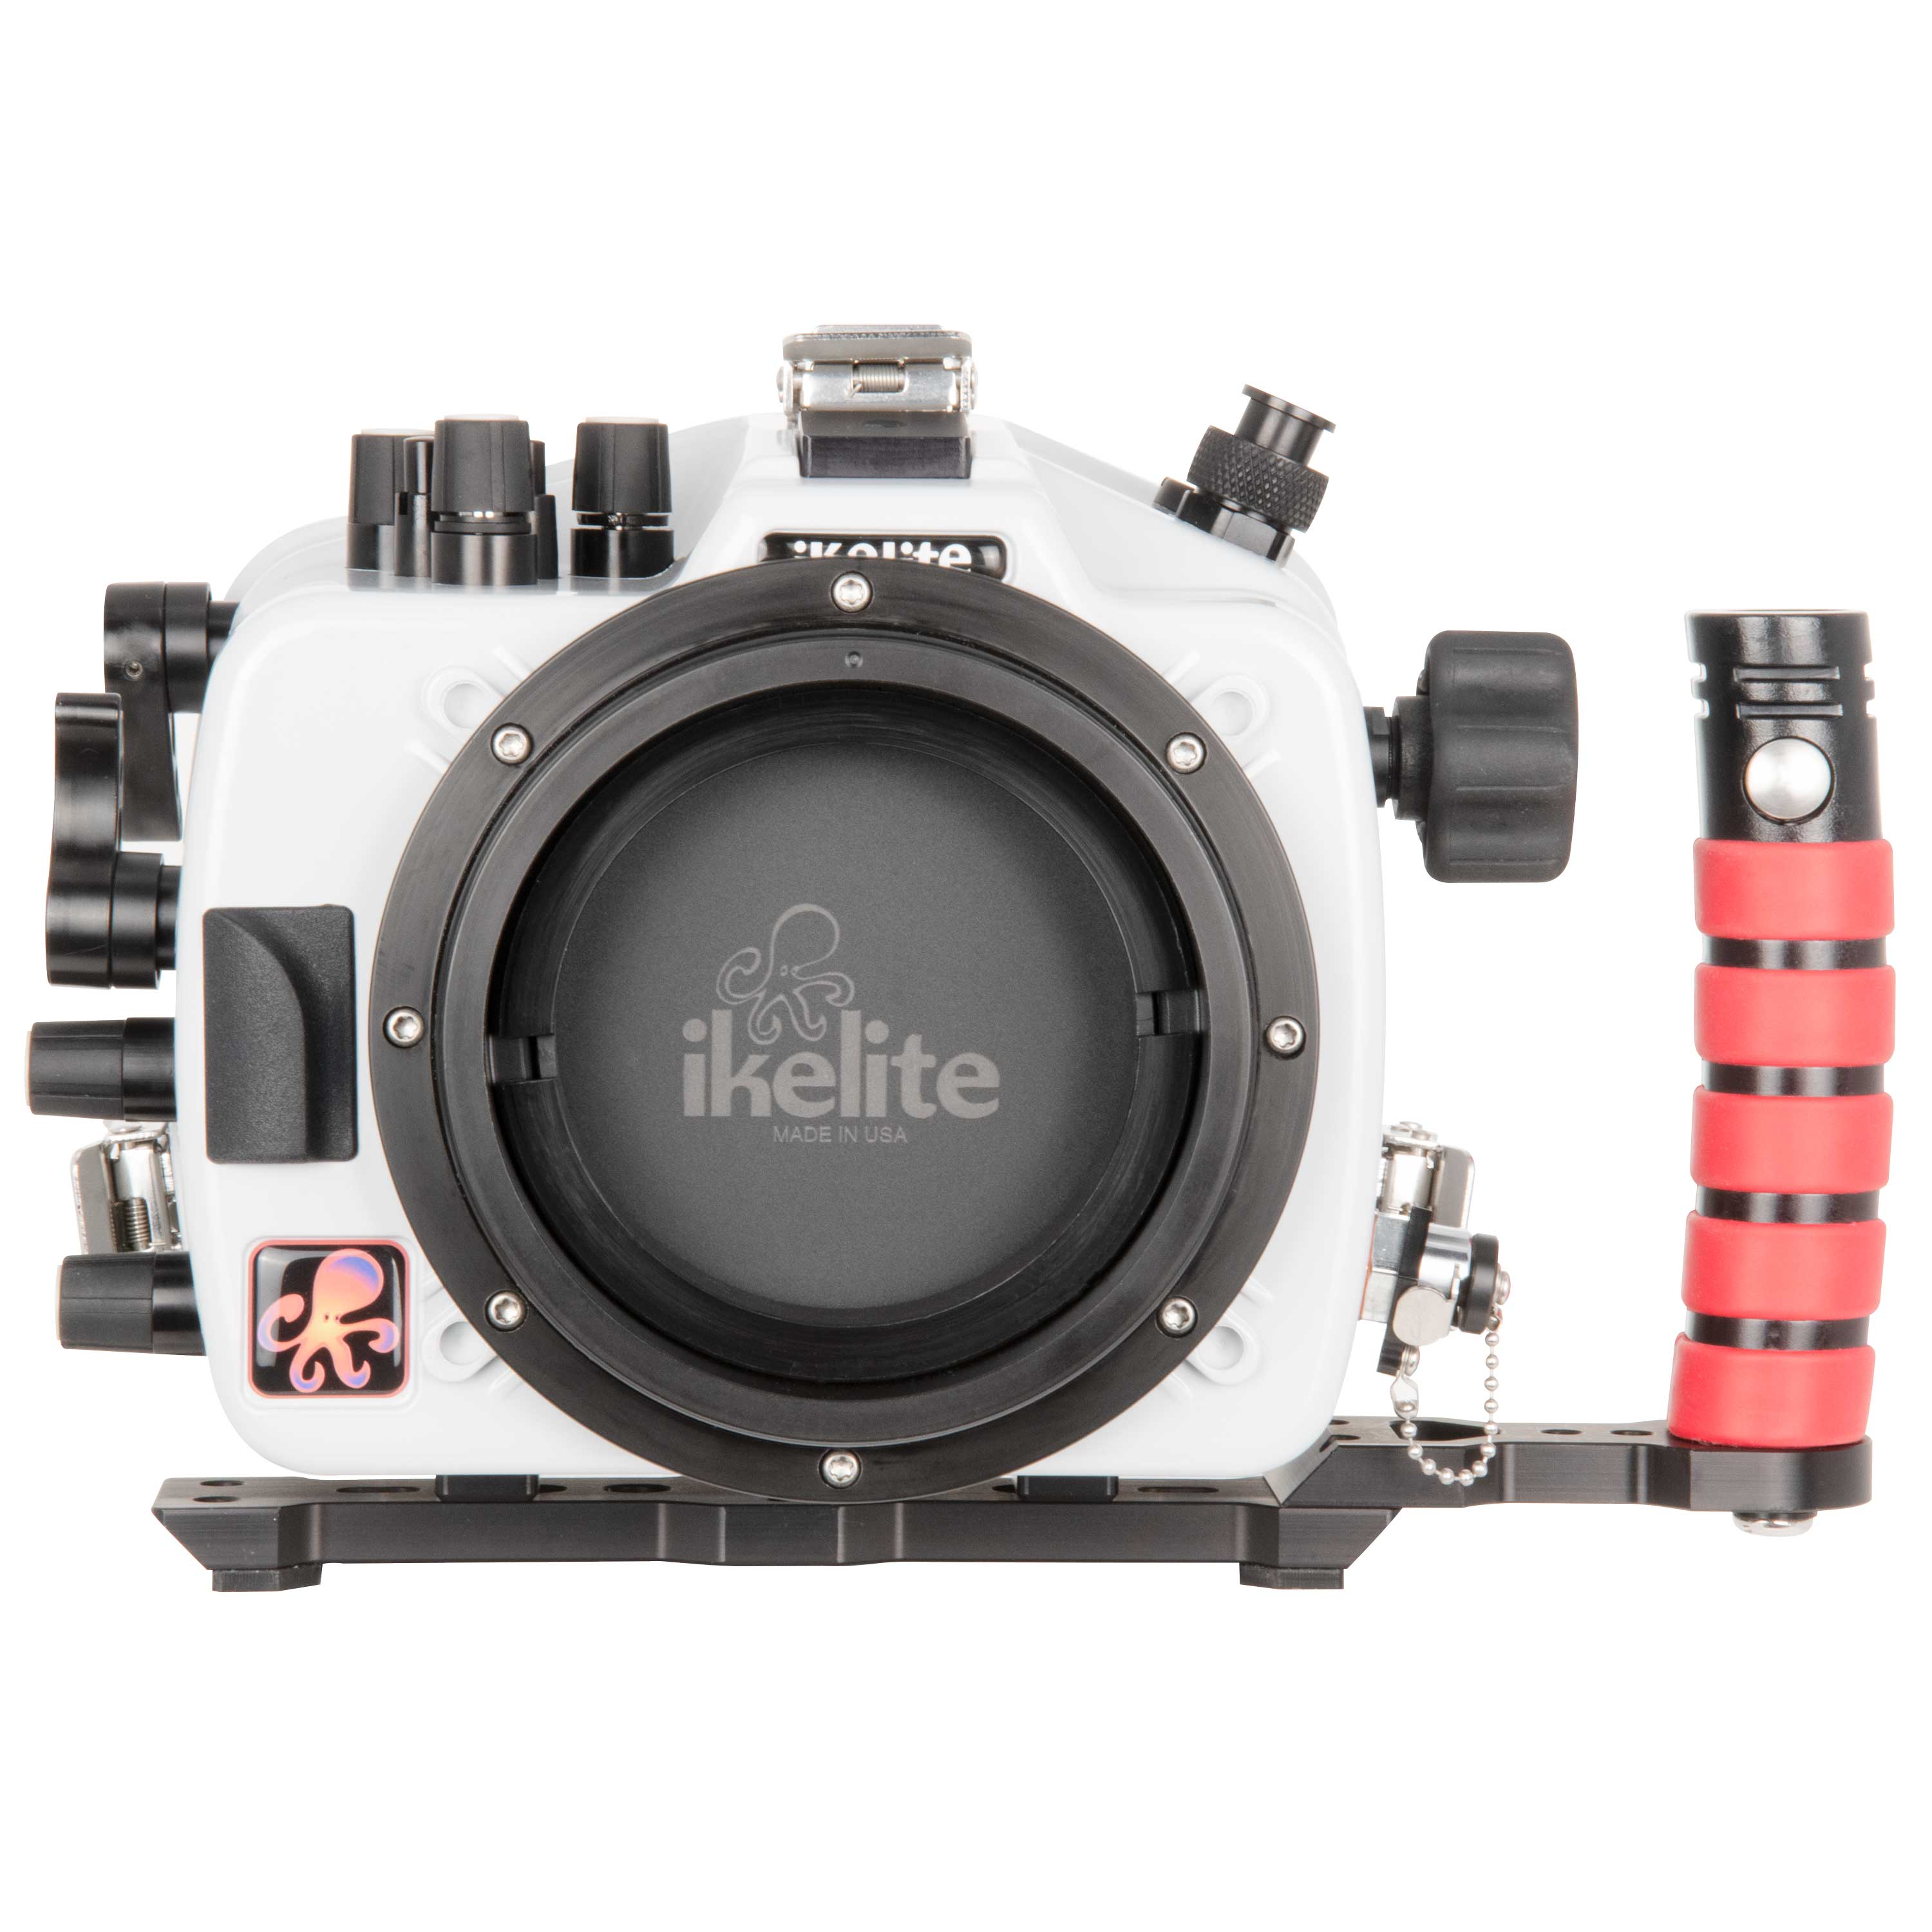 Ikelite 200DL Underwater Housing for Sony Alpha a7S III Mirrorless Digital Cameras